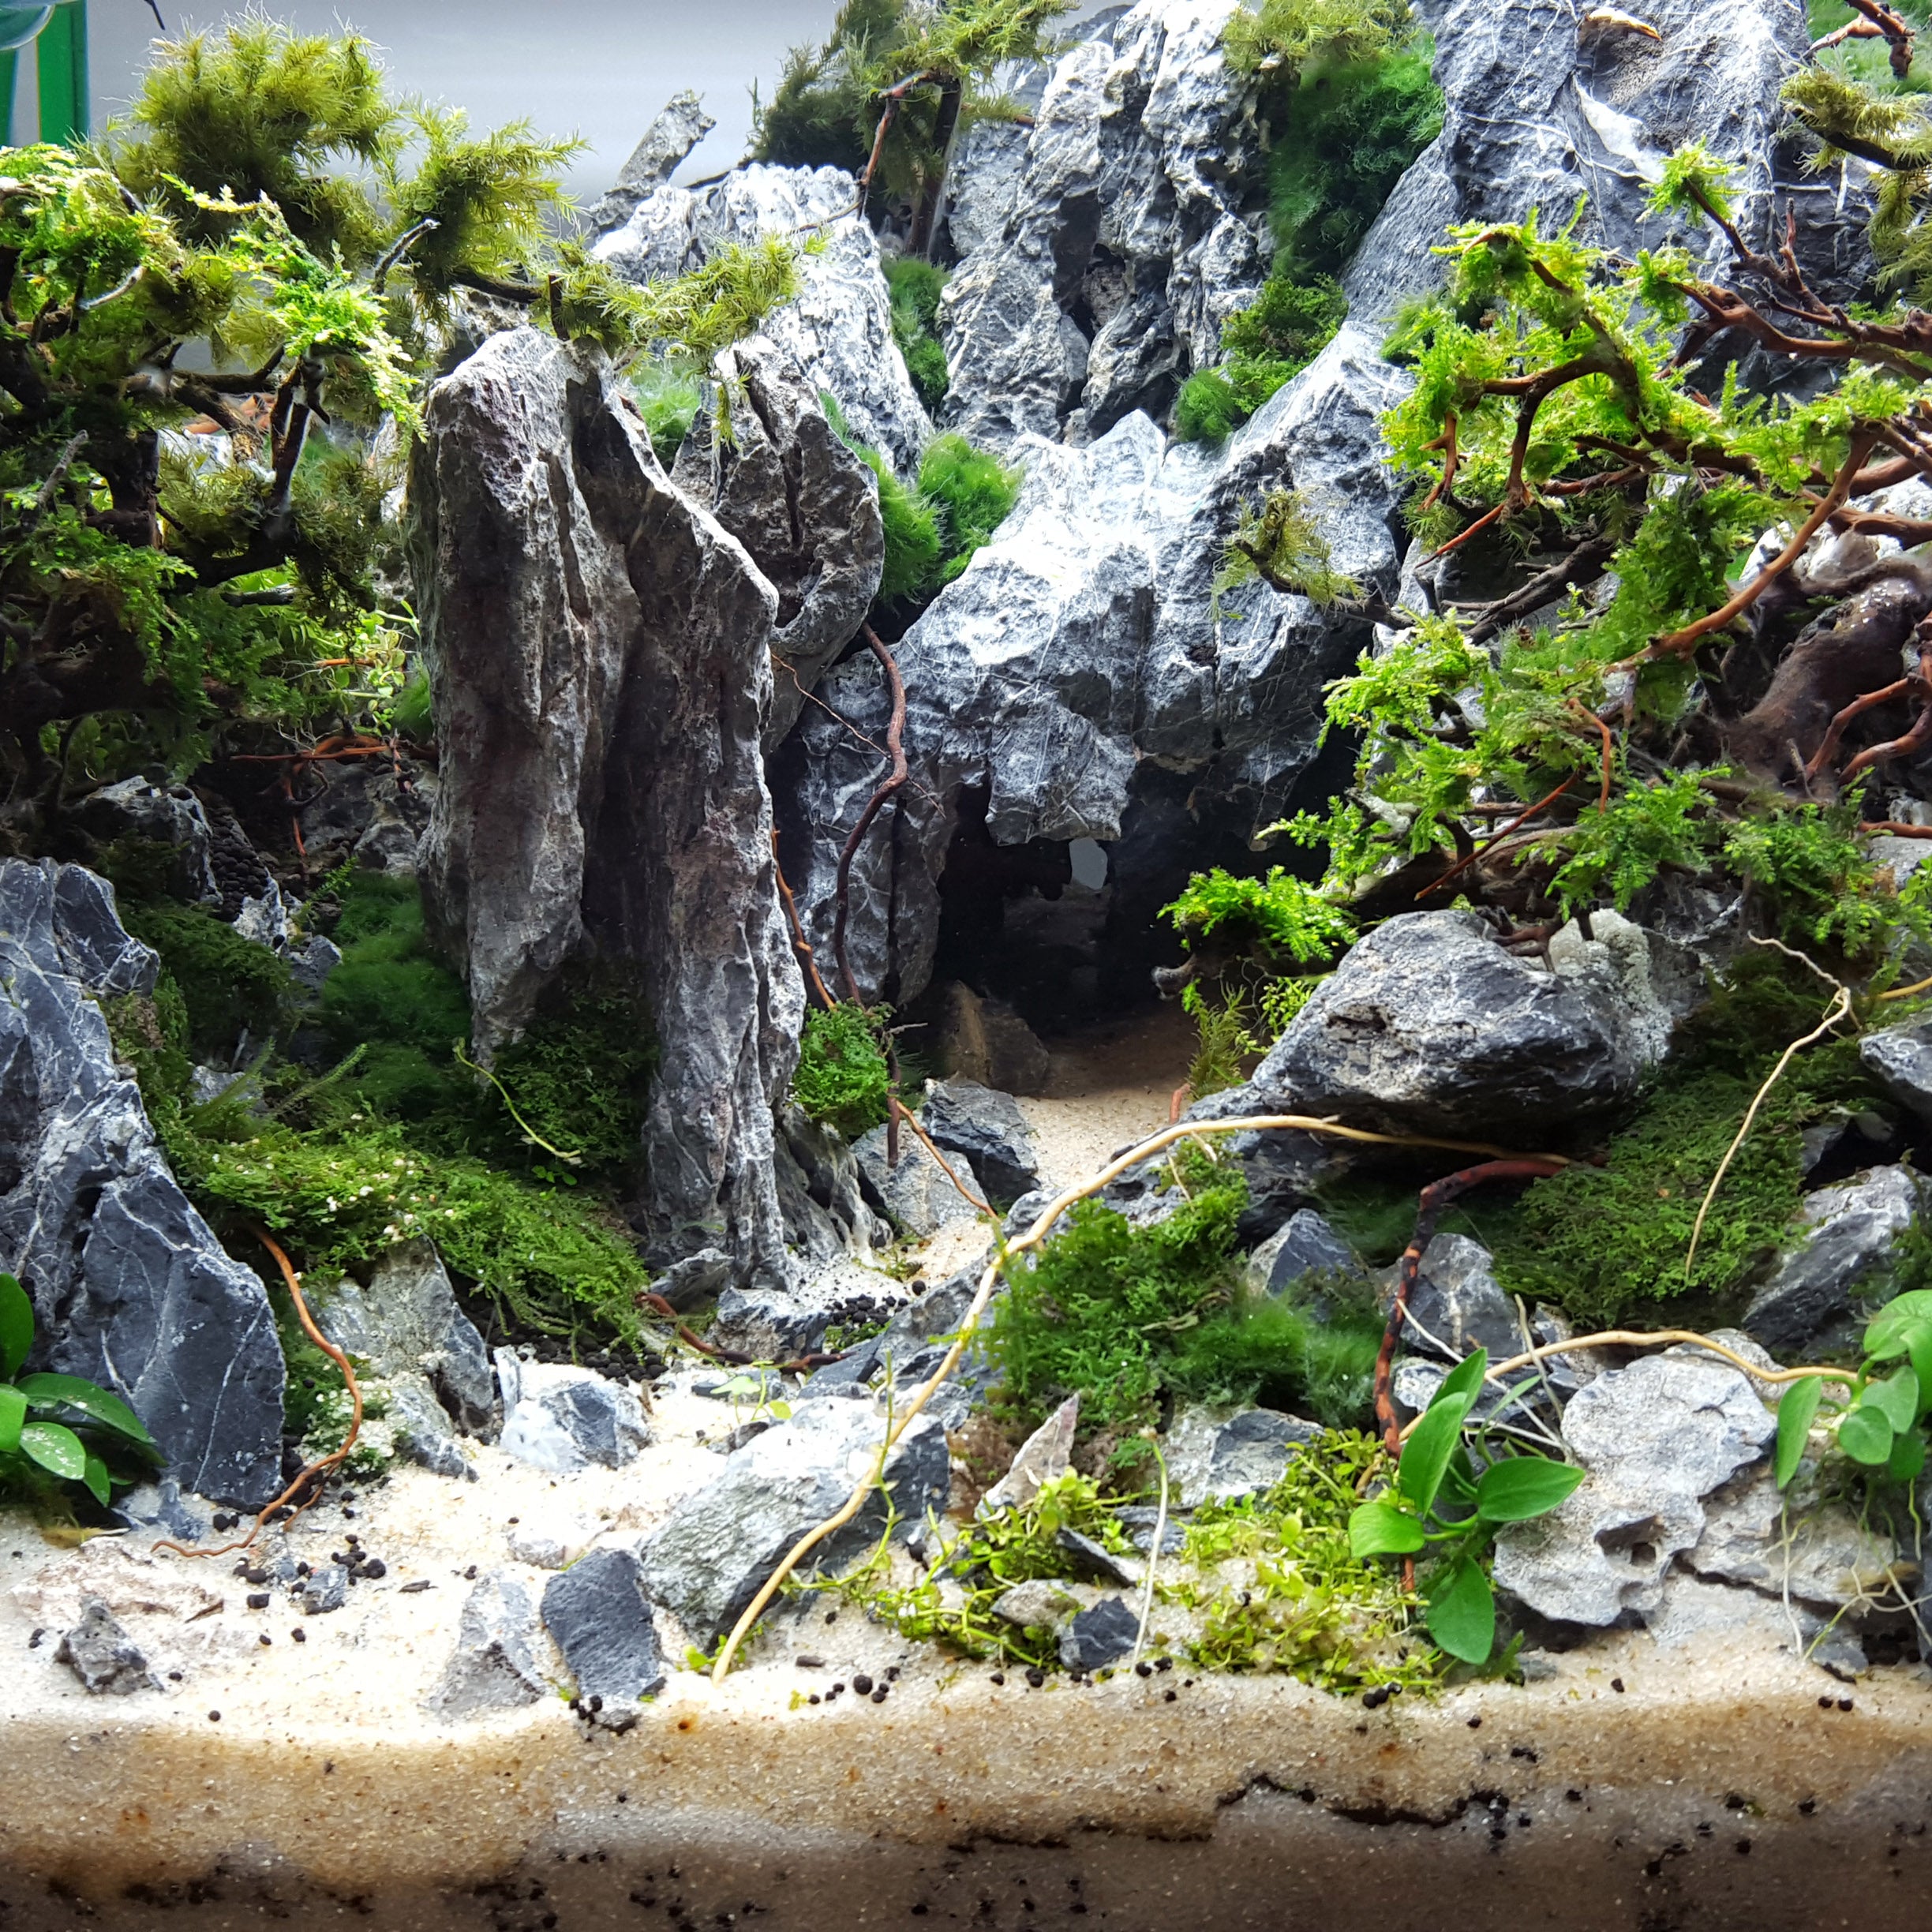 Wholesale Natural Seiryu Stone Aquarium Rocks for Landscape Pond